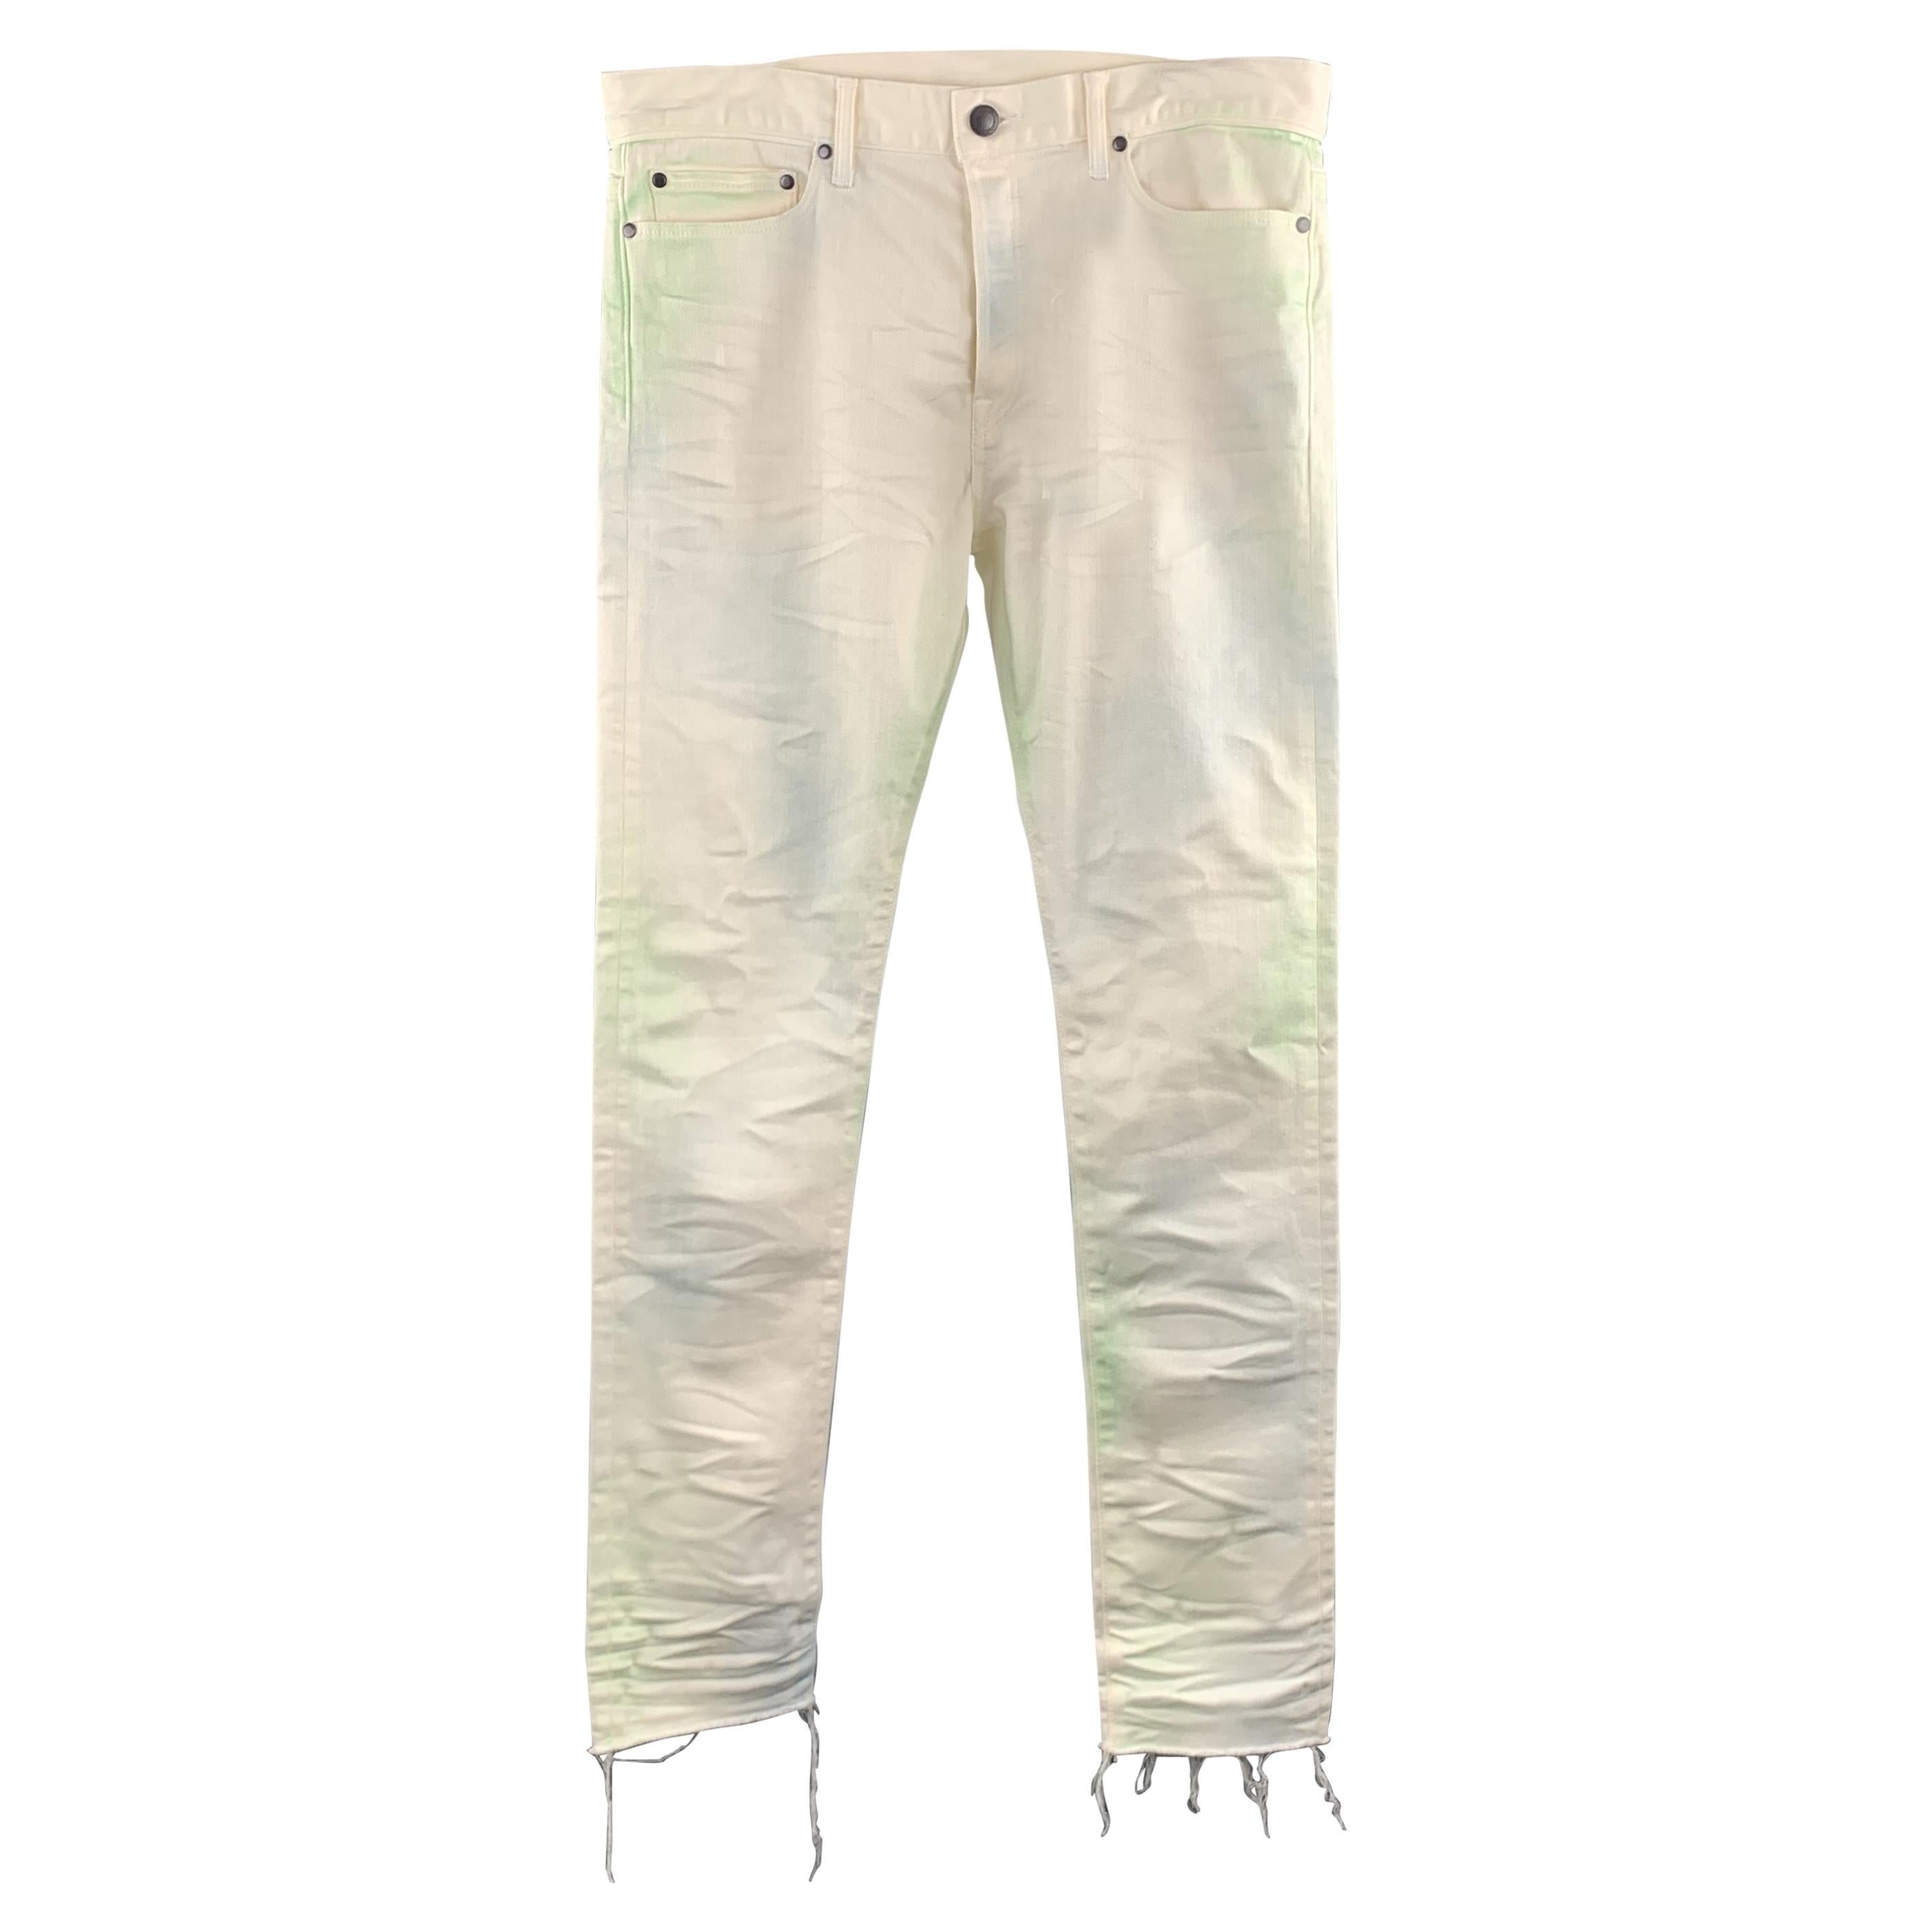 JOHN ELLIOTT Size 34 x 34 Off White / Green Distressed Cotton Button Fly Jeans